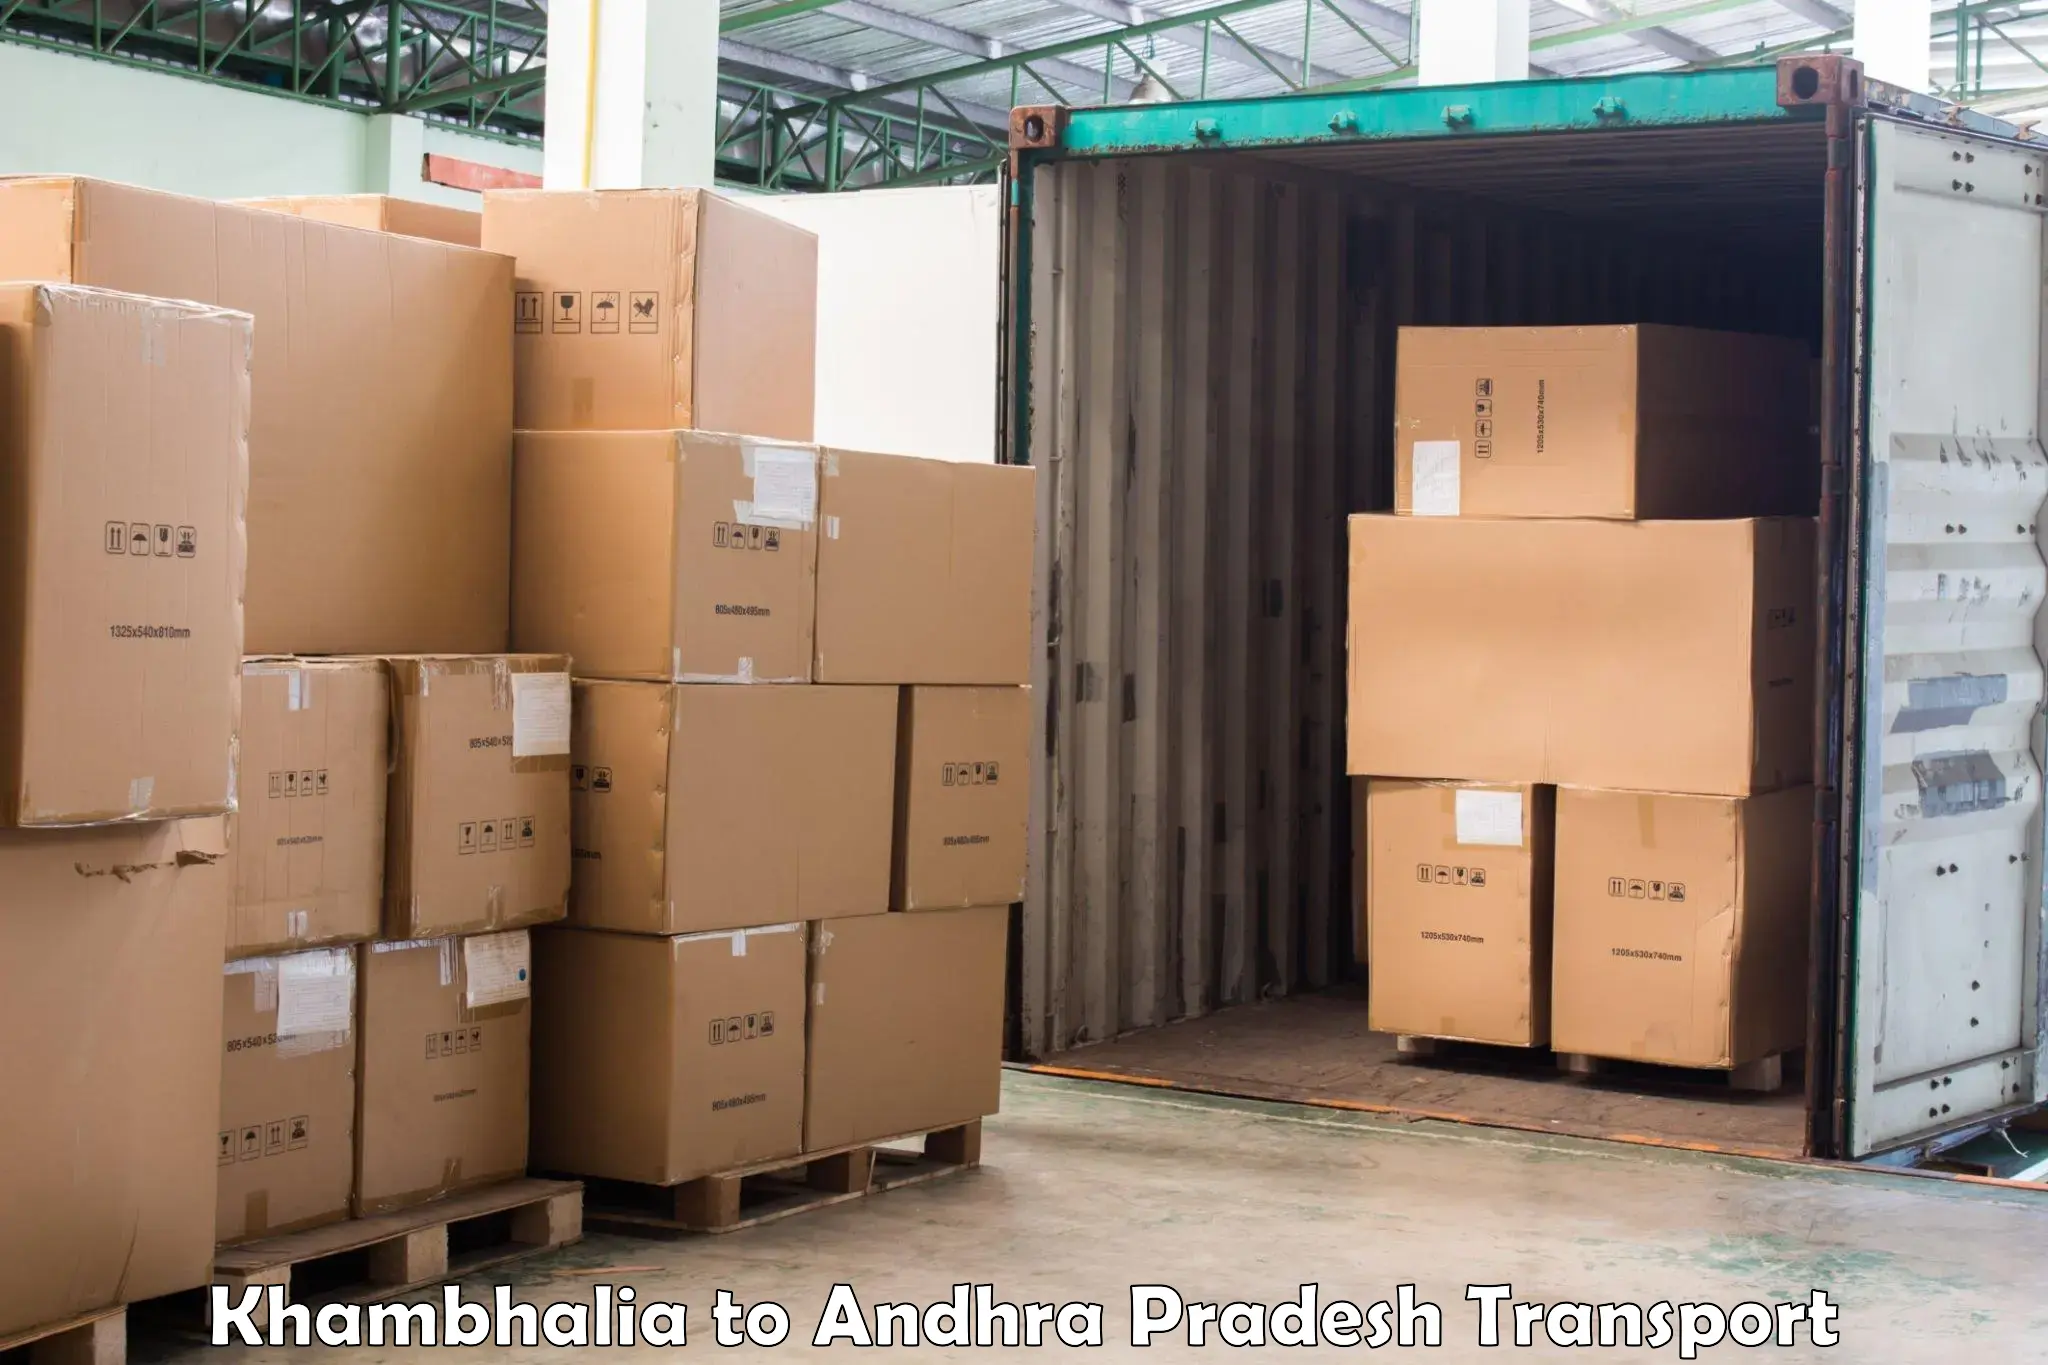 Truck transport companies in India in Khambhalia to Rayadurgam